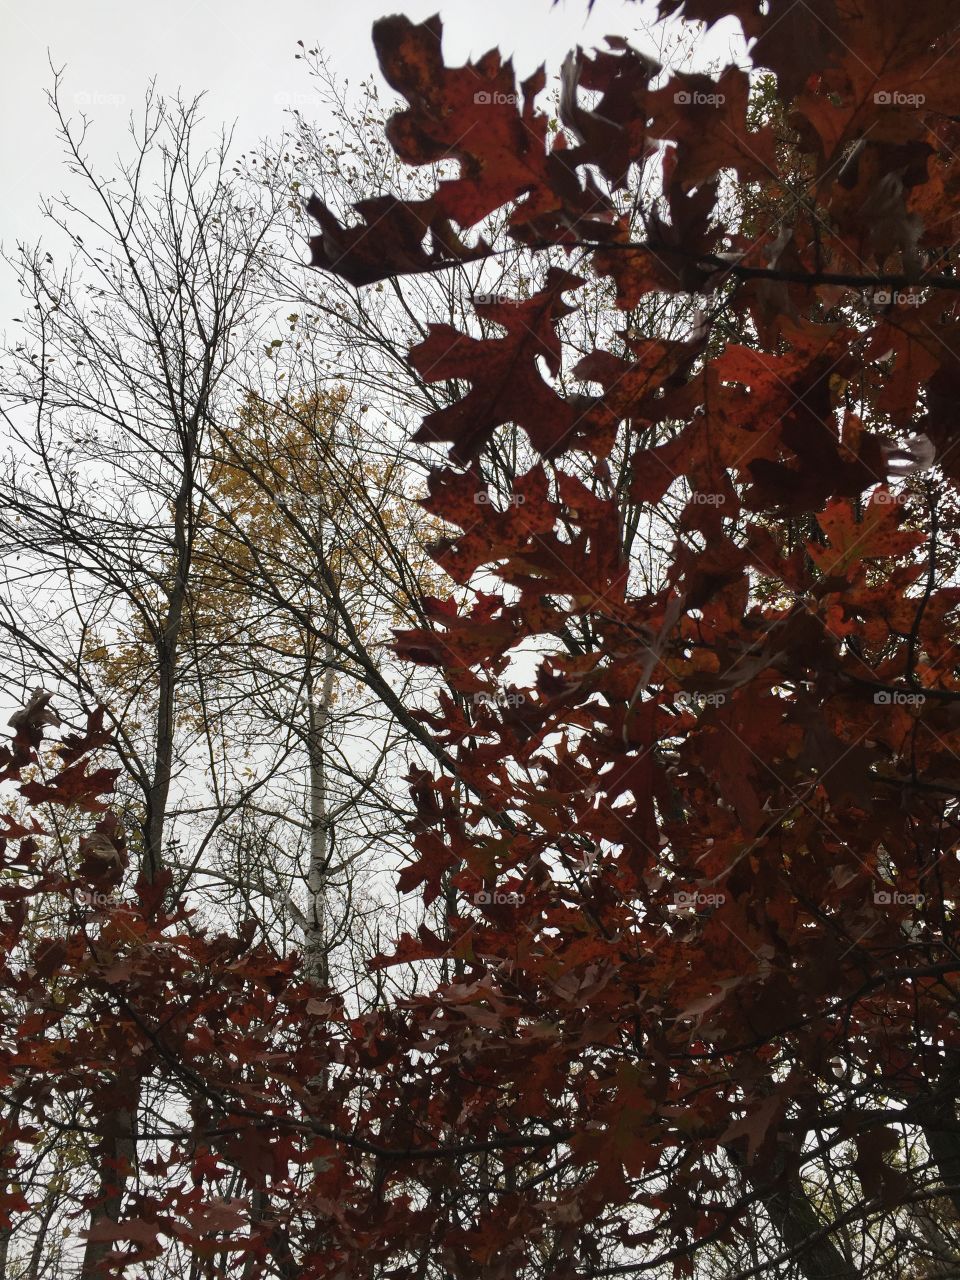 The leaves of an oak tree